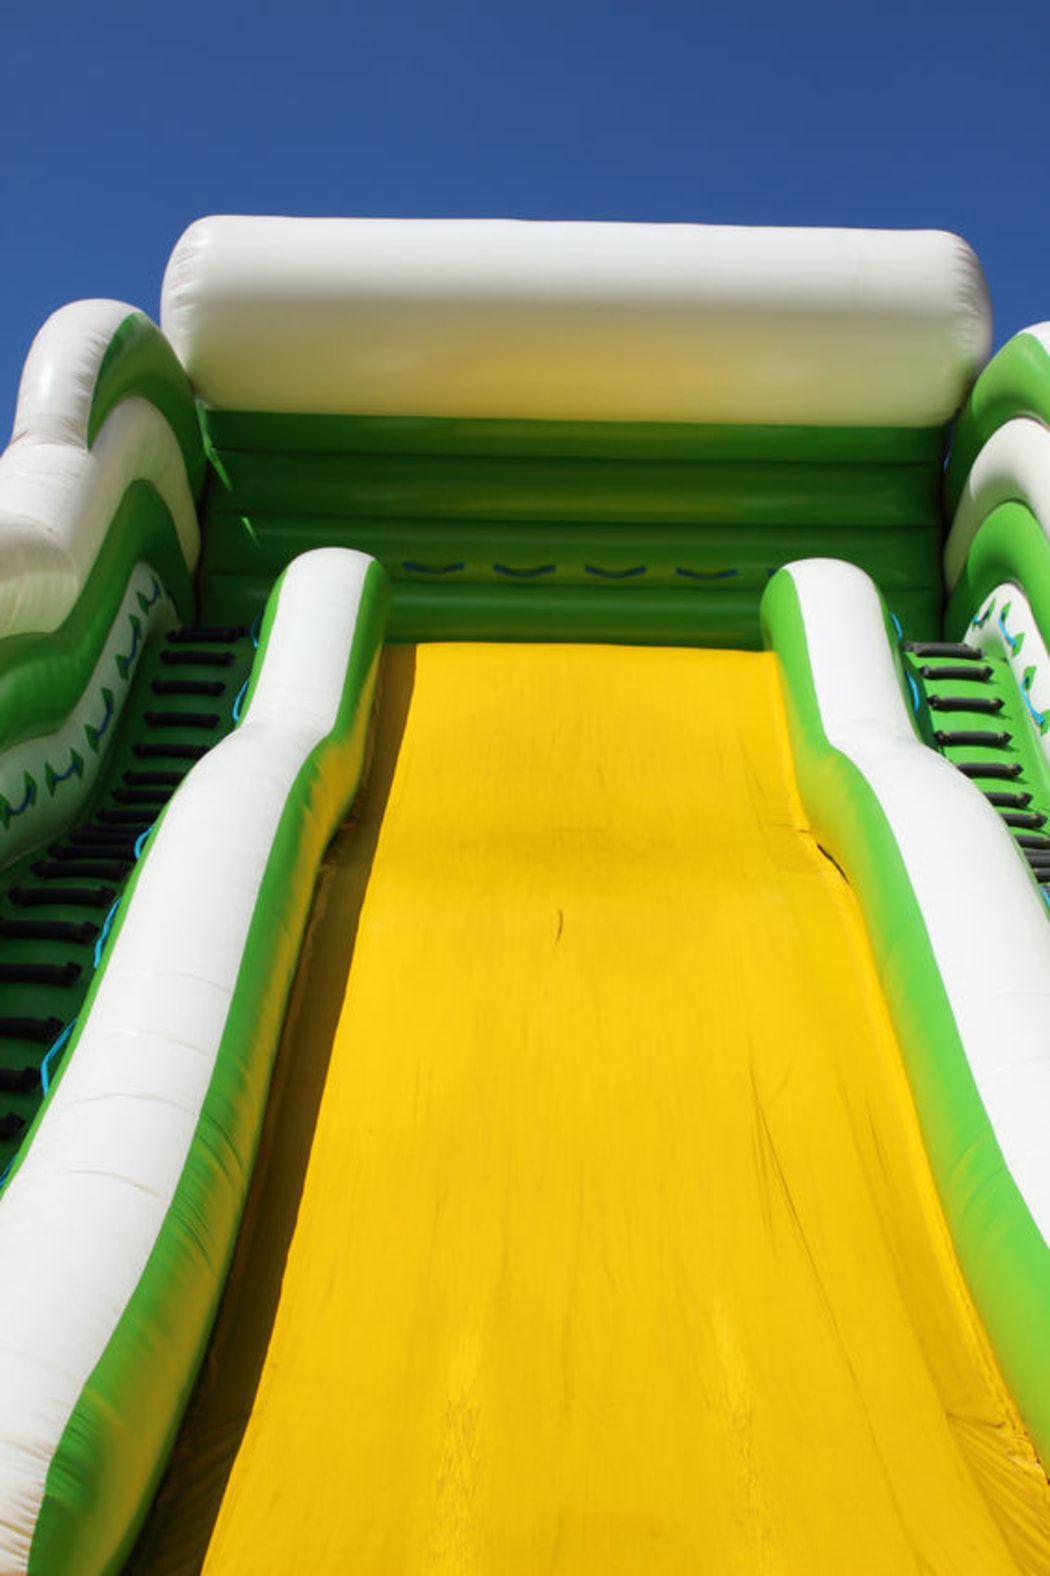 Inflatable slide (stock photo).